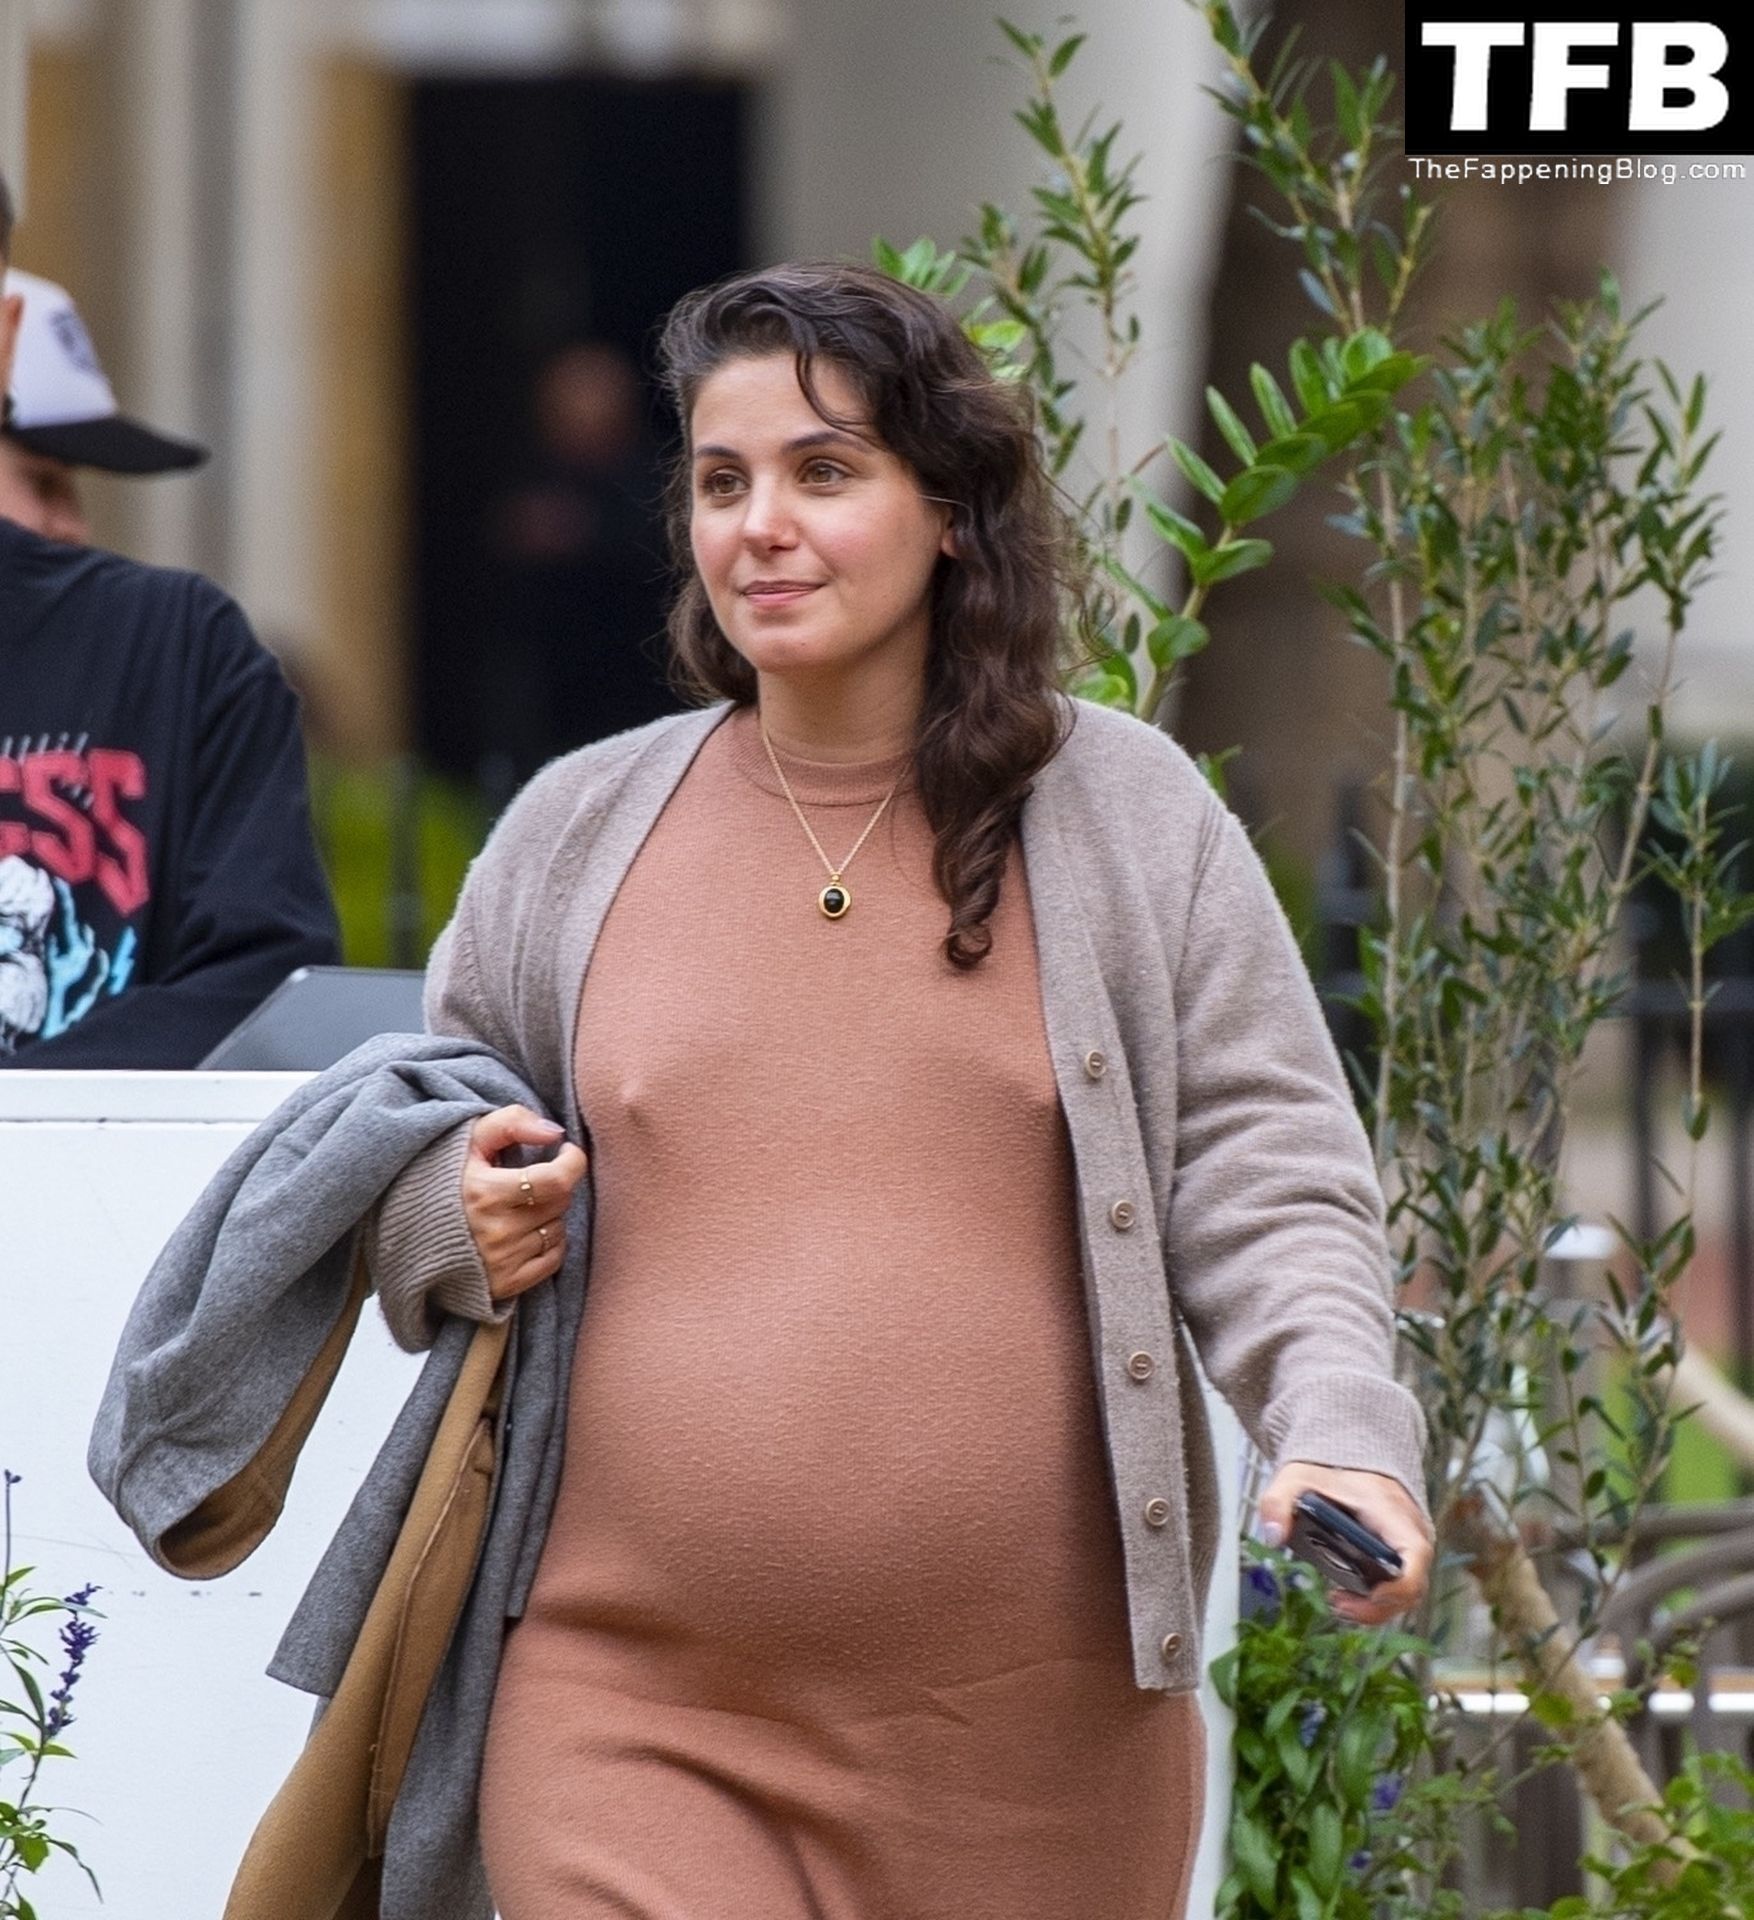 Katie Melua Shows Off Her Pokies &amp; Big Baby Bump in London (5 Photos)